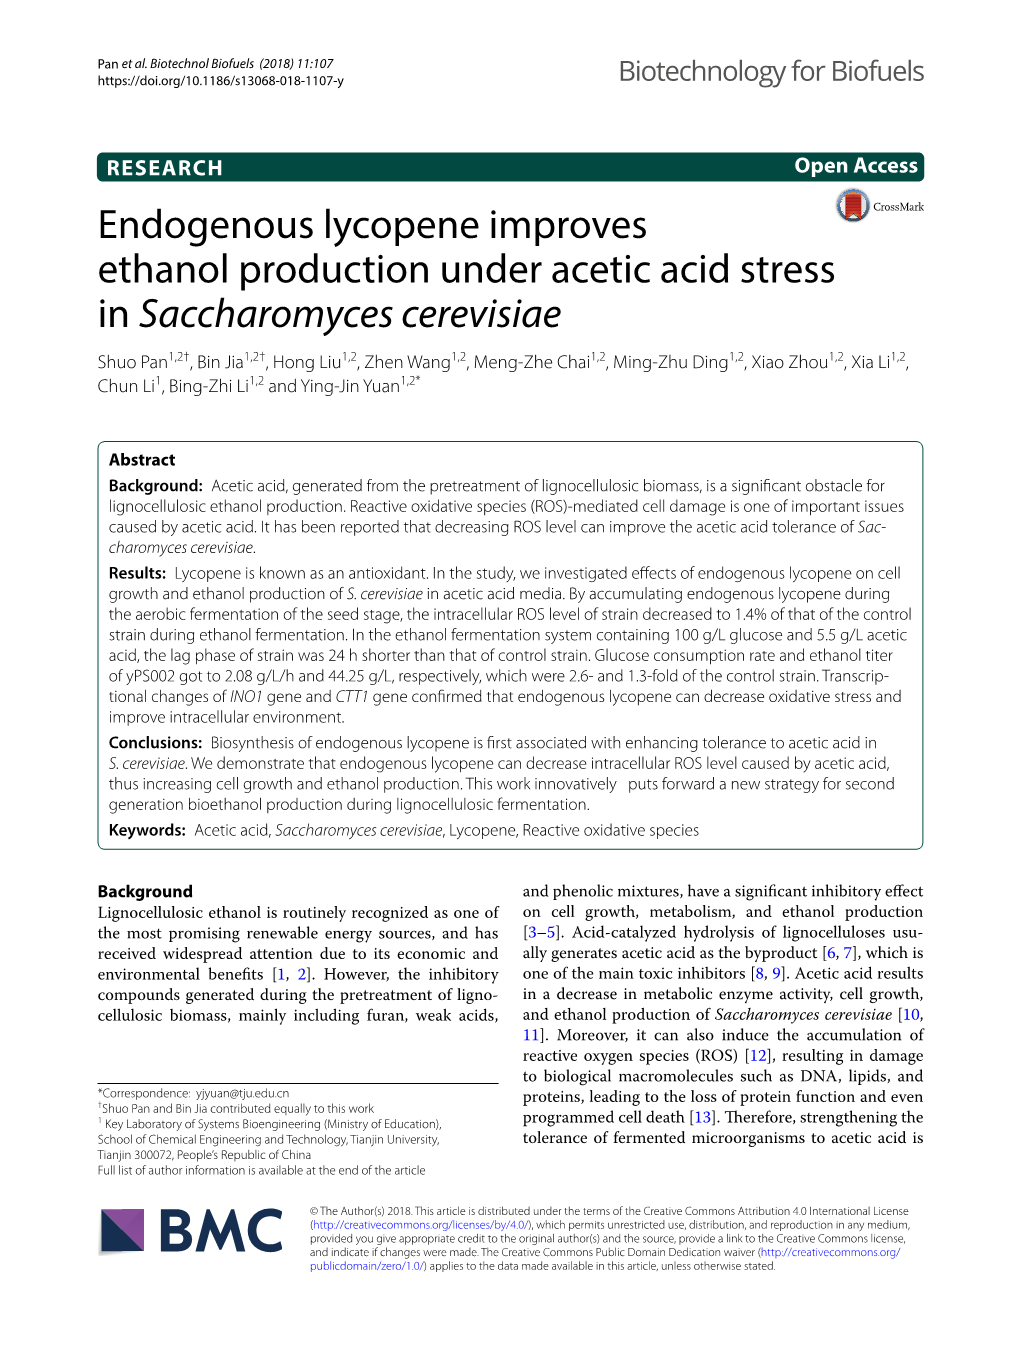 Endogenous Lycopene Improves Ethanol Production Under Acetic